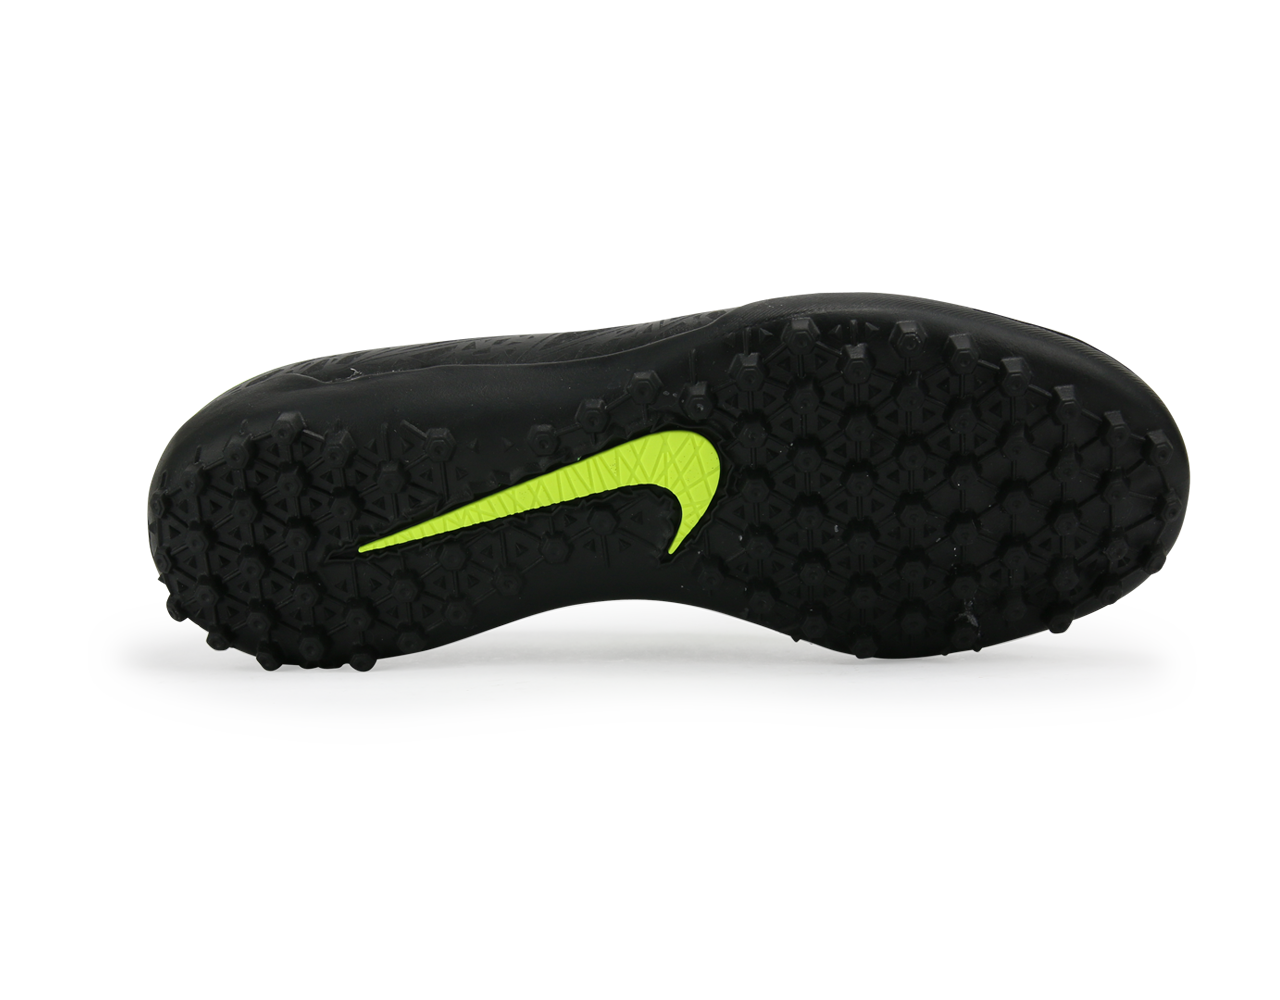 Nike Kids Hypervenom Phelon II Turf Soccer Shoes Black/Black/Volt